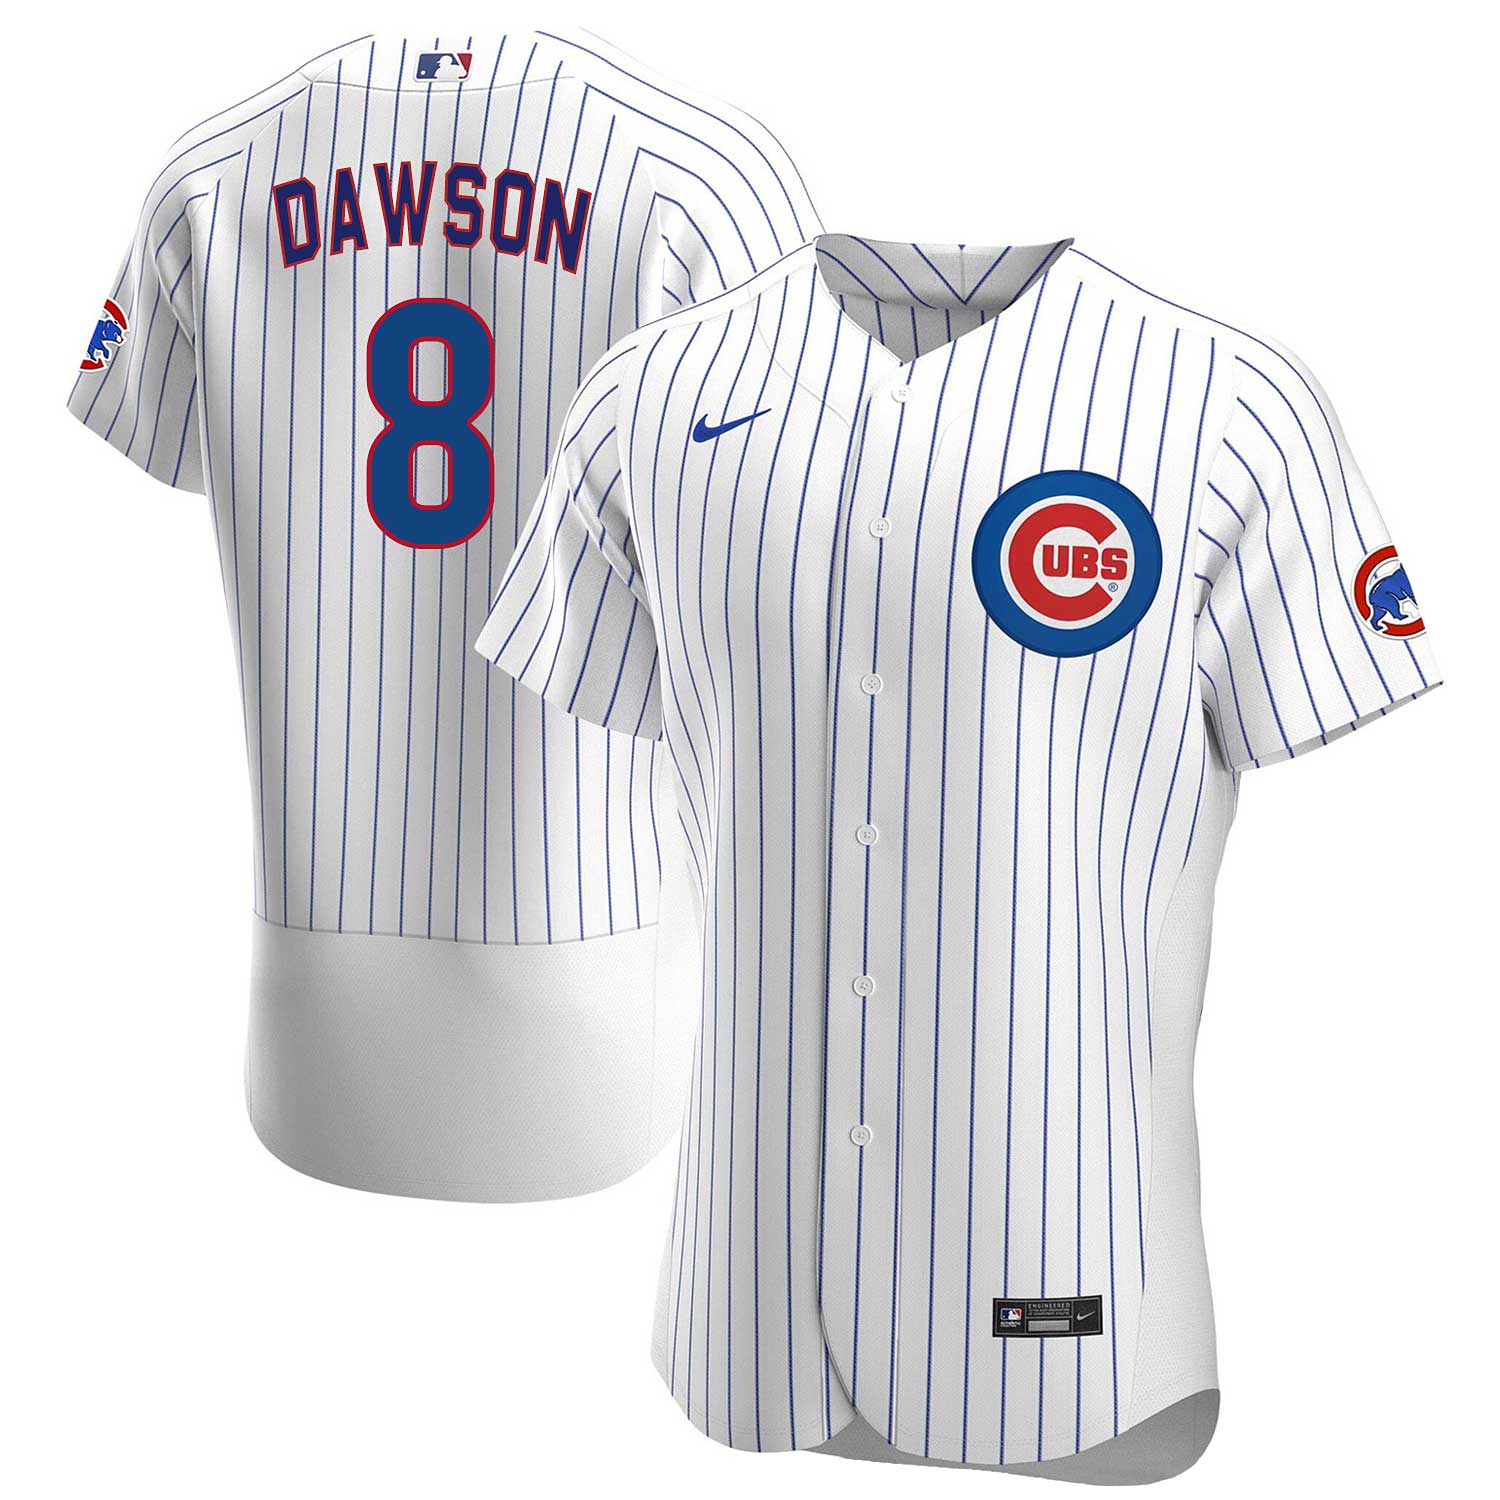 Andre Dawson - Chicago Cubs  Andre dawson, Chicago cubs baseball